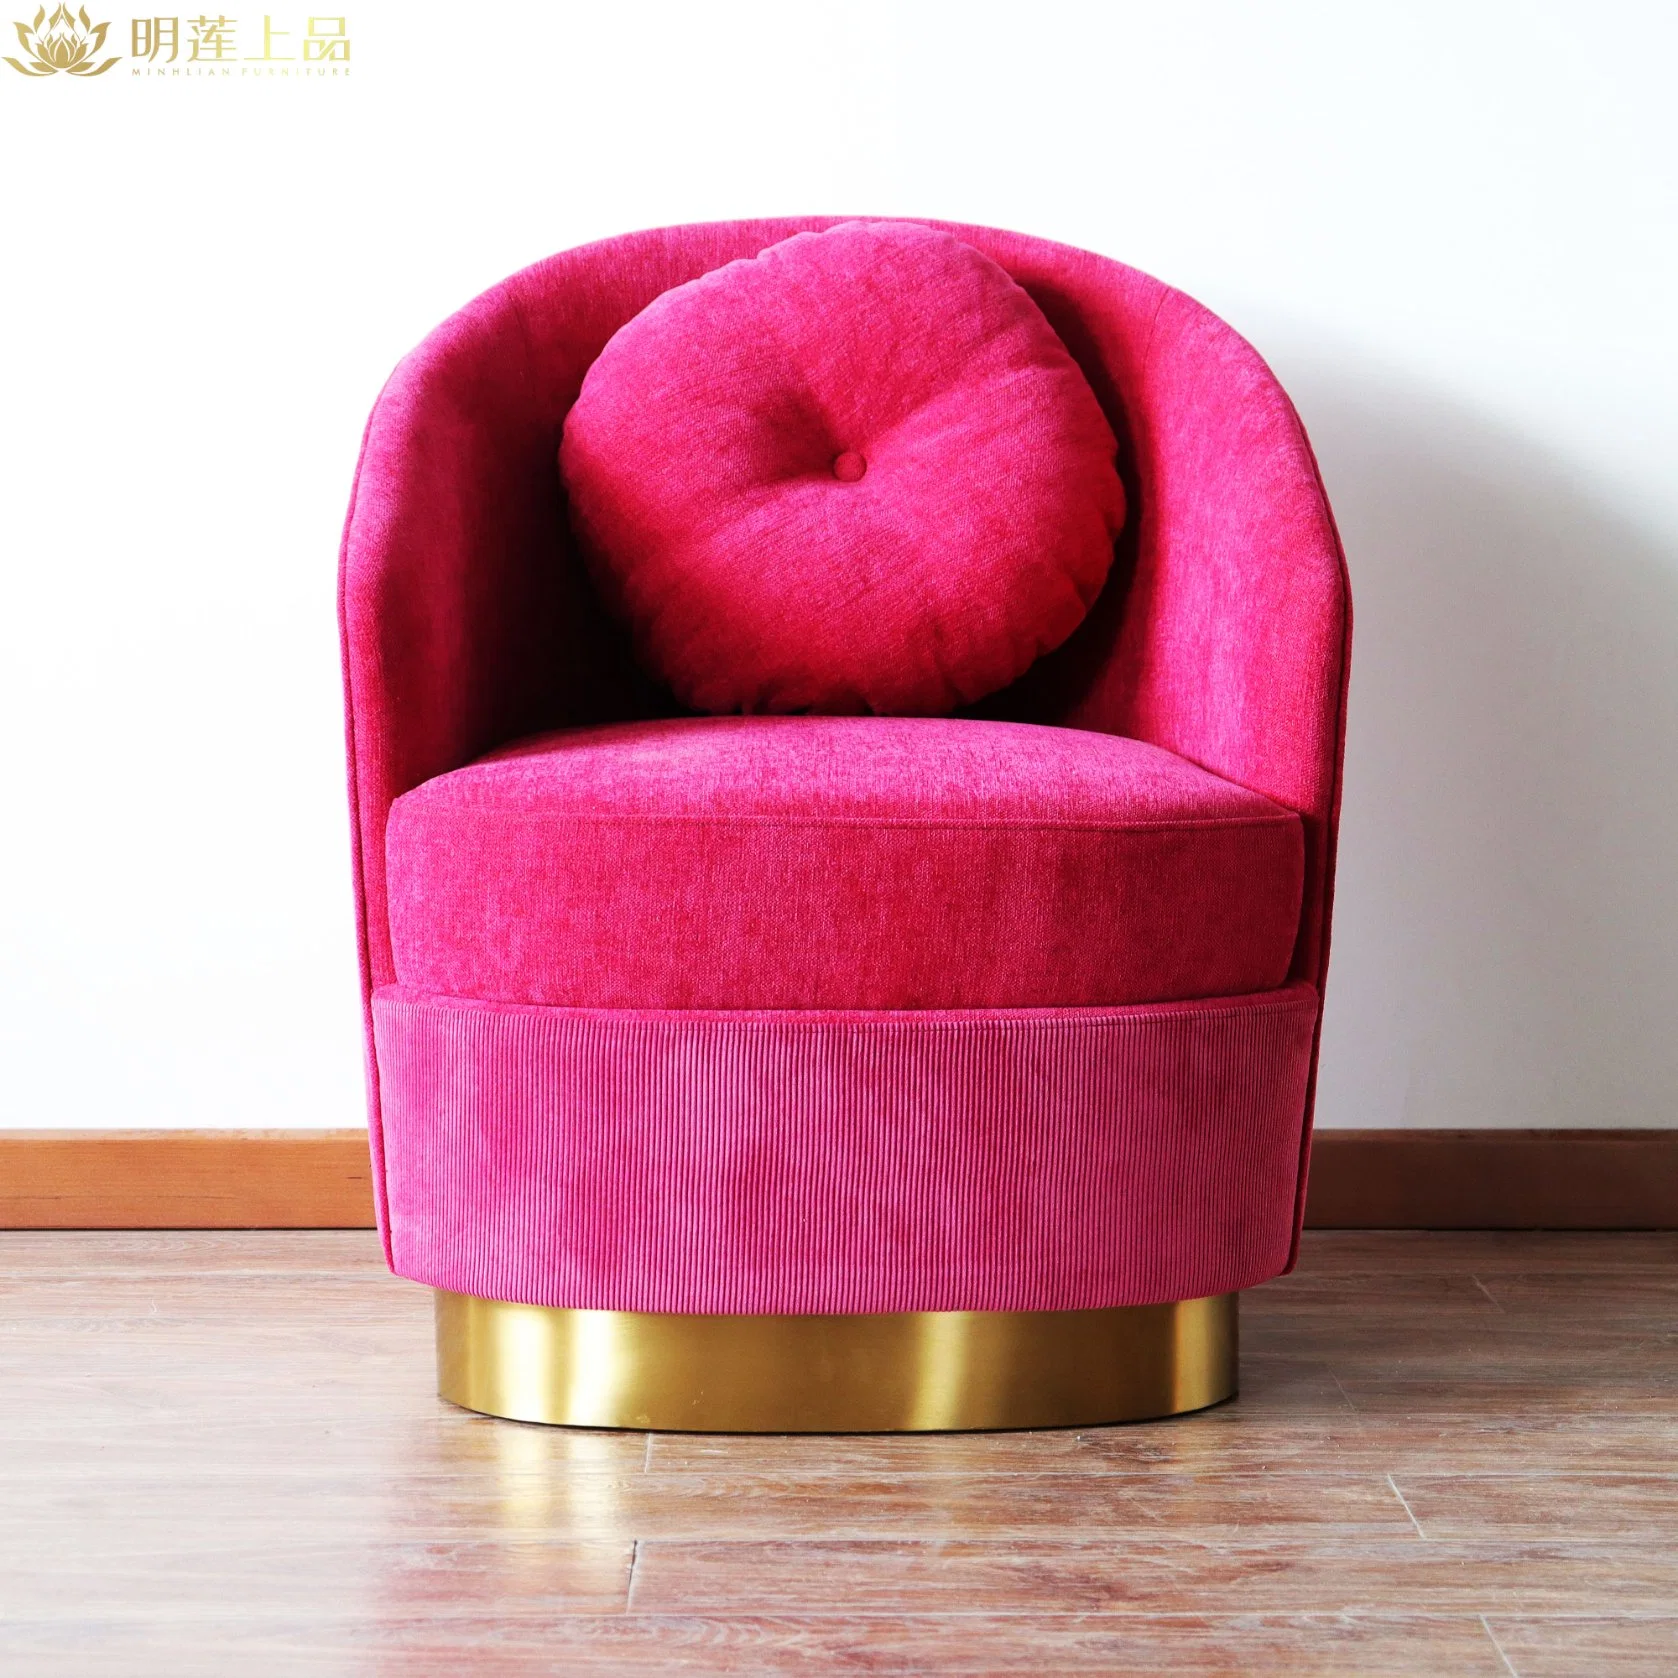 Modern Design Fabric Single Sofa Chair Living Room Furniture Home Furniture Leisure Chair Lounge Chair Hotel Room Sofa Chair